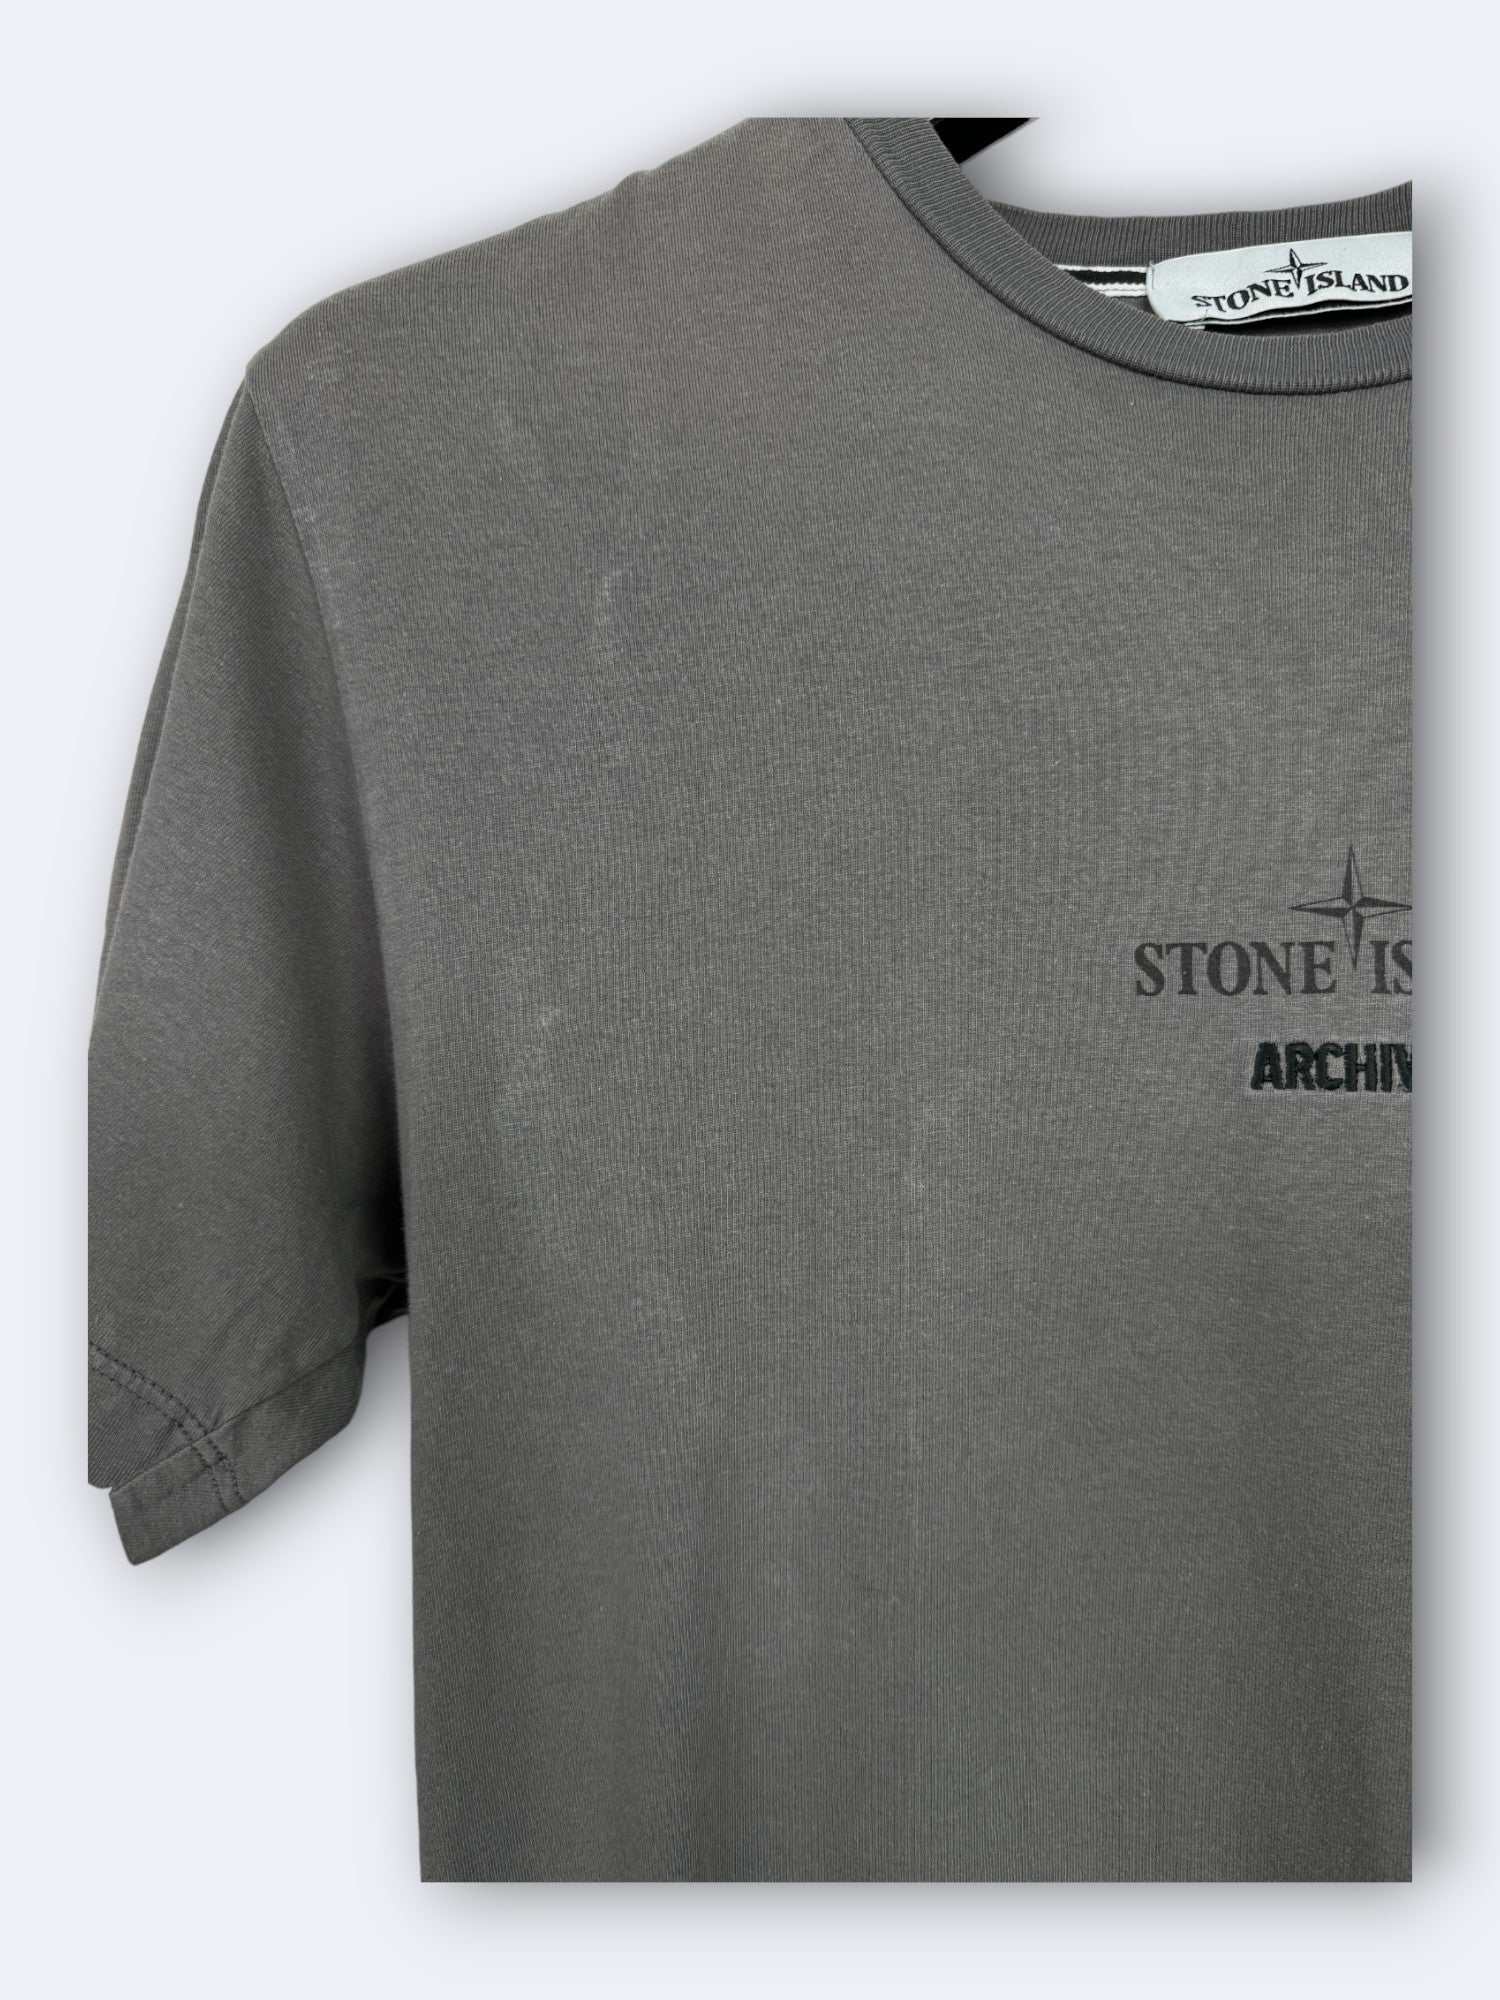 Tee-shirt Stone Island "Archivio" - S Casual Area